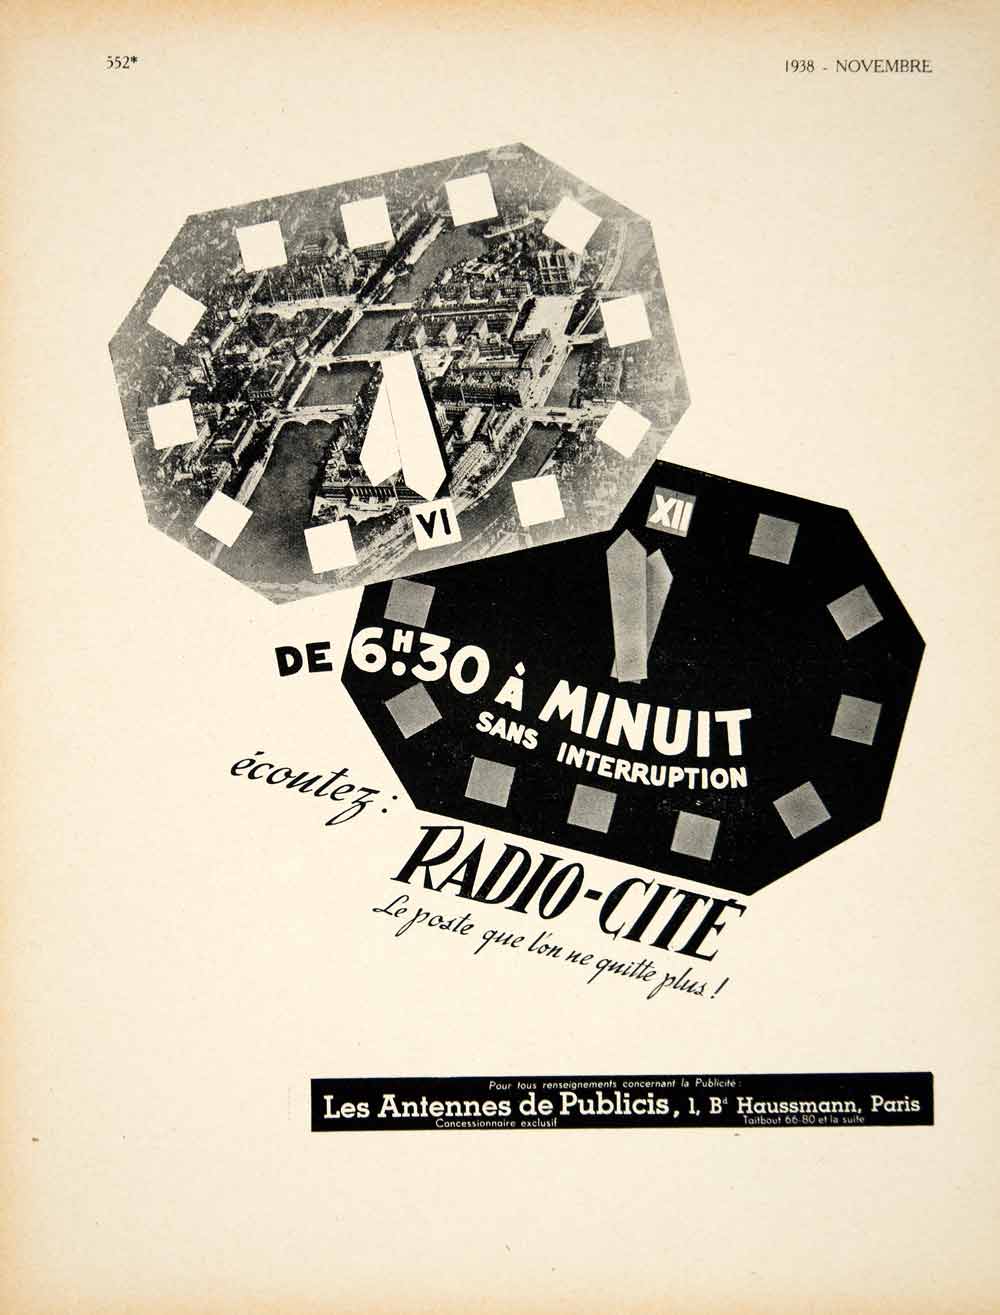 1938 Ad Vintage French Radio Radio-Cite Paris Ile de la Cite Broadcasting VEN9